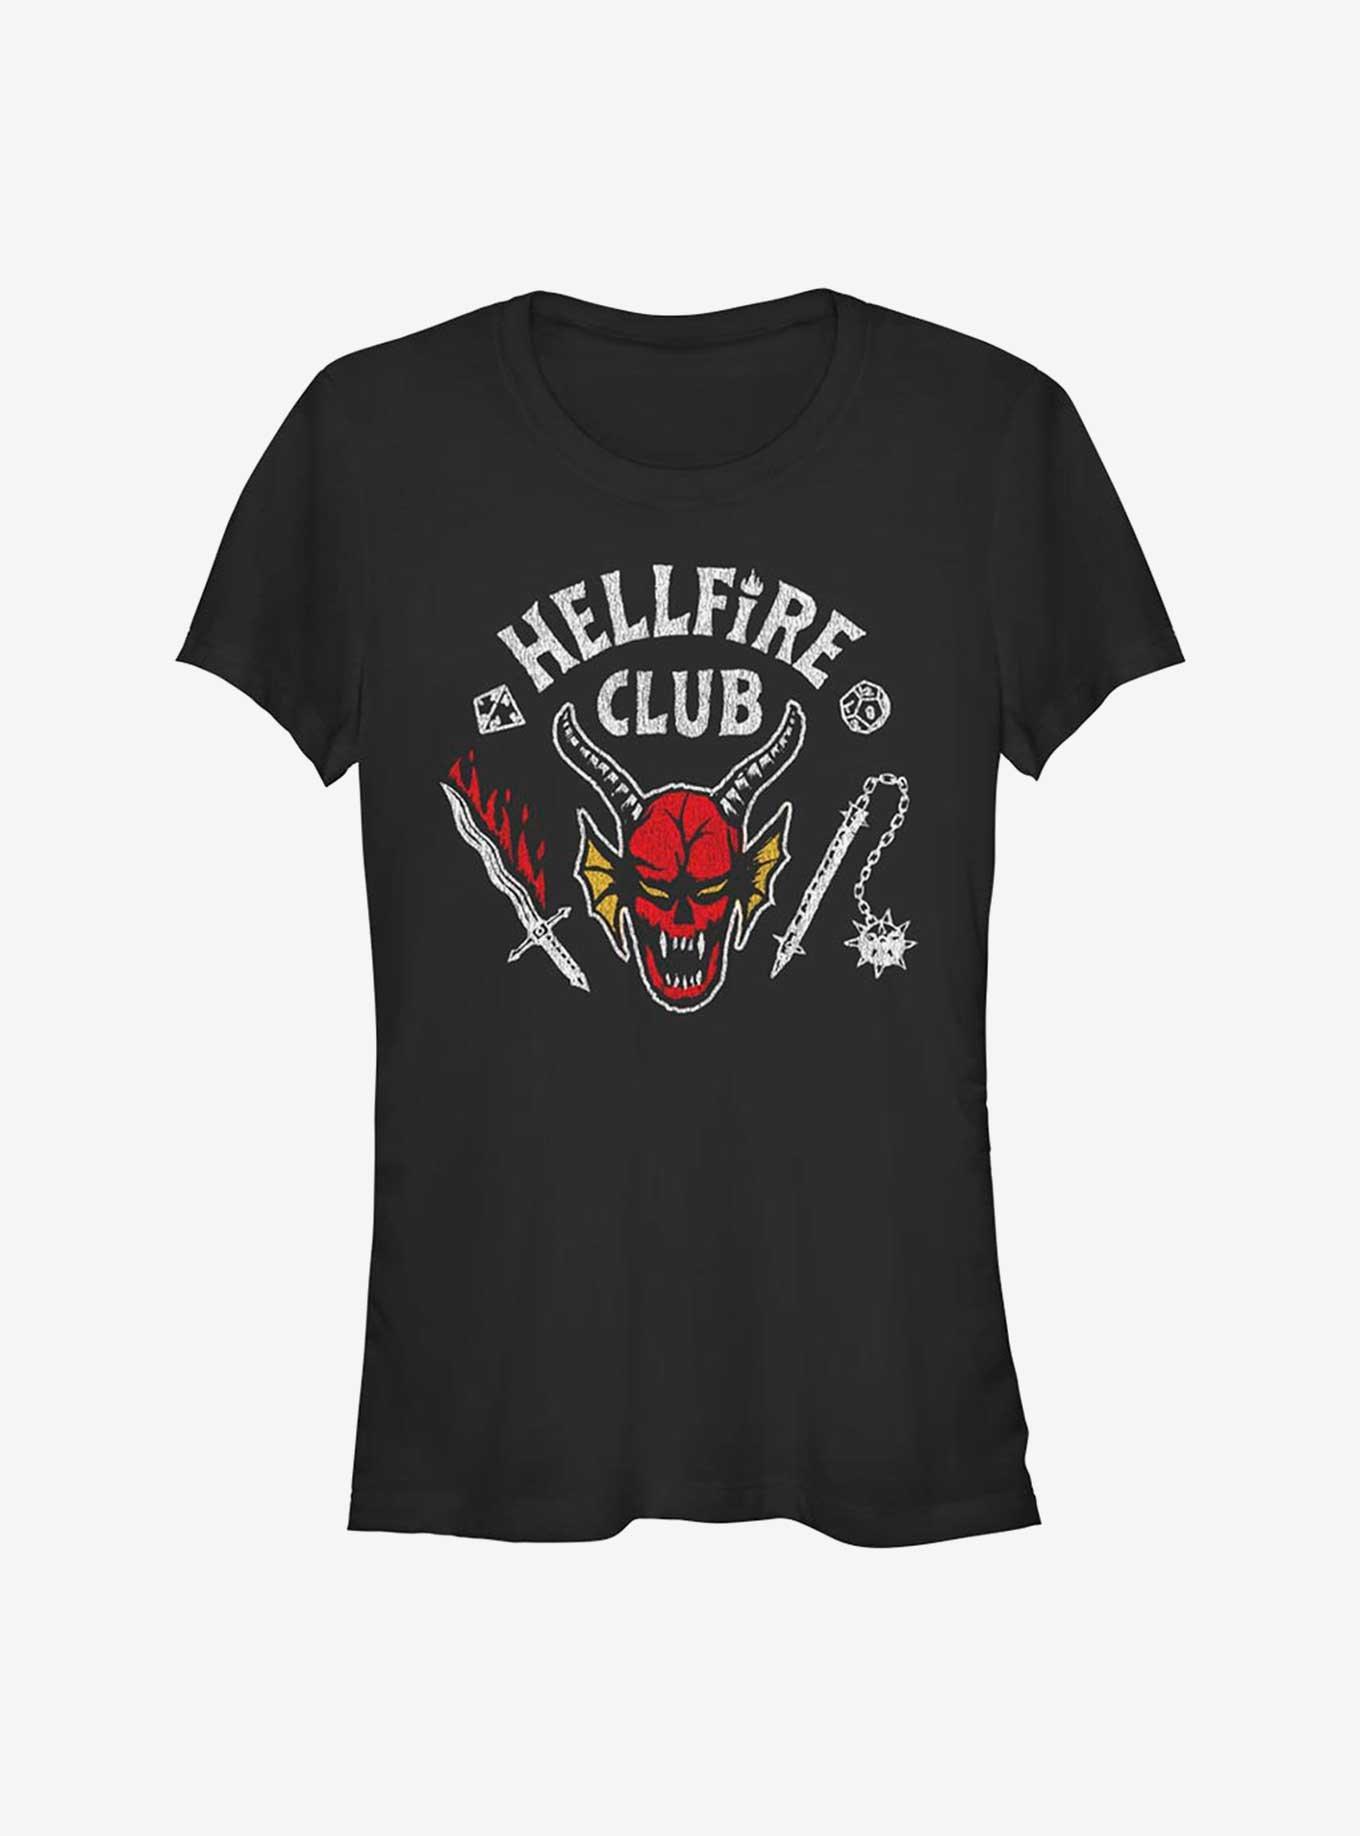 Hot Topic Stranger Things Hellfire Club Textured Mug